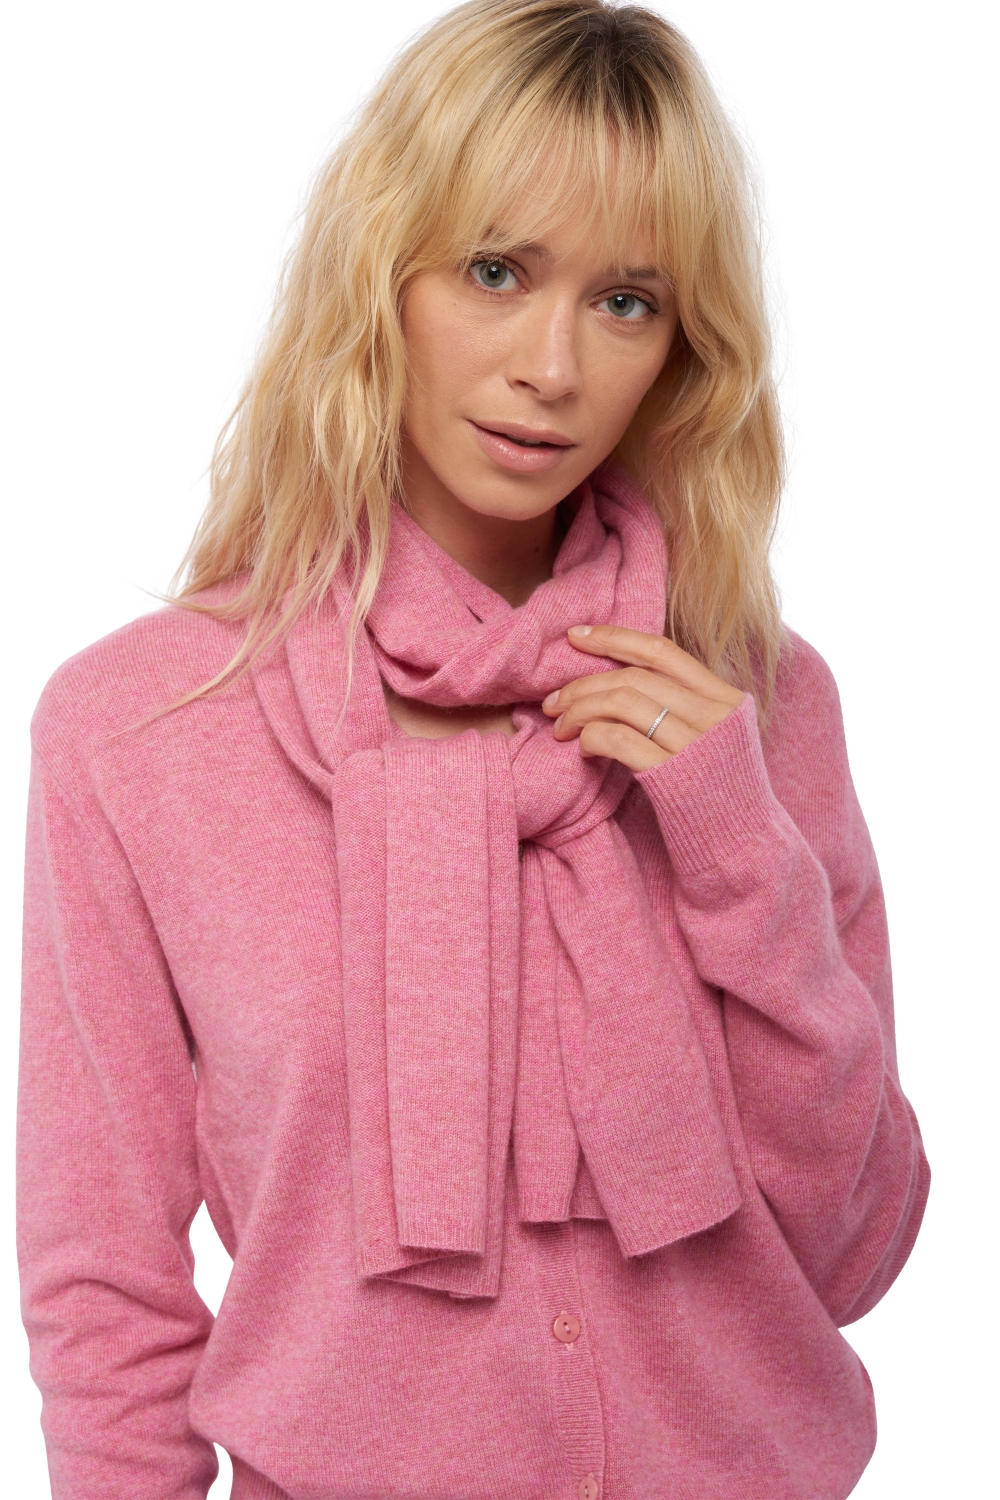 Cashmere ladies scarves mufflers ozone carnation pink 160 x 30 cm